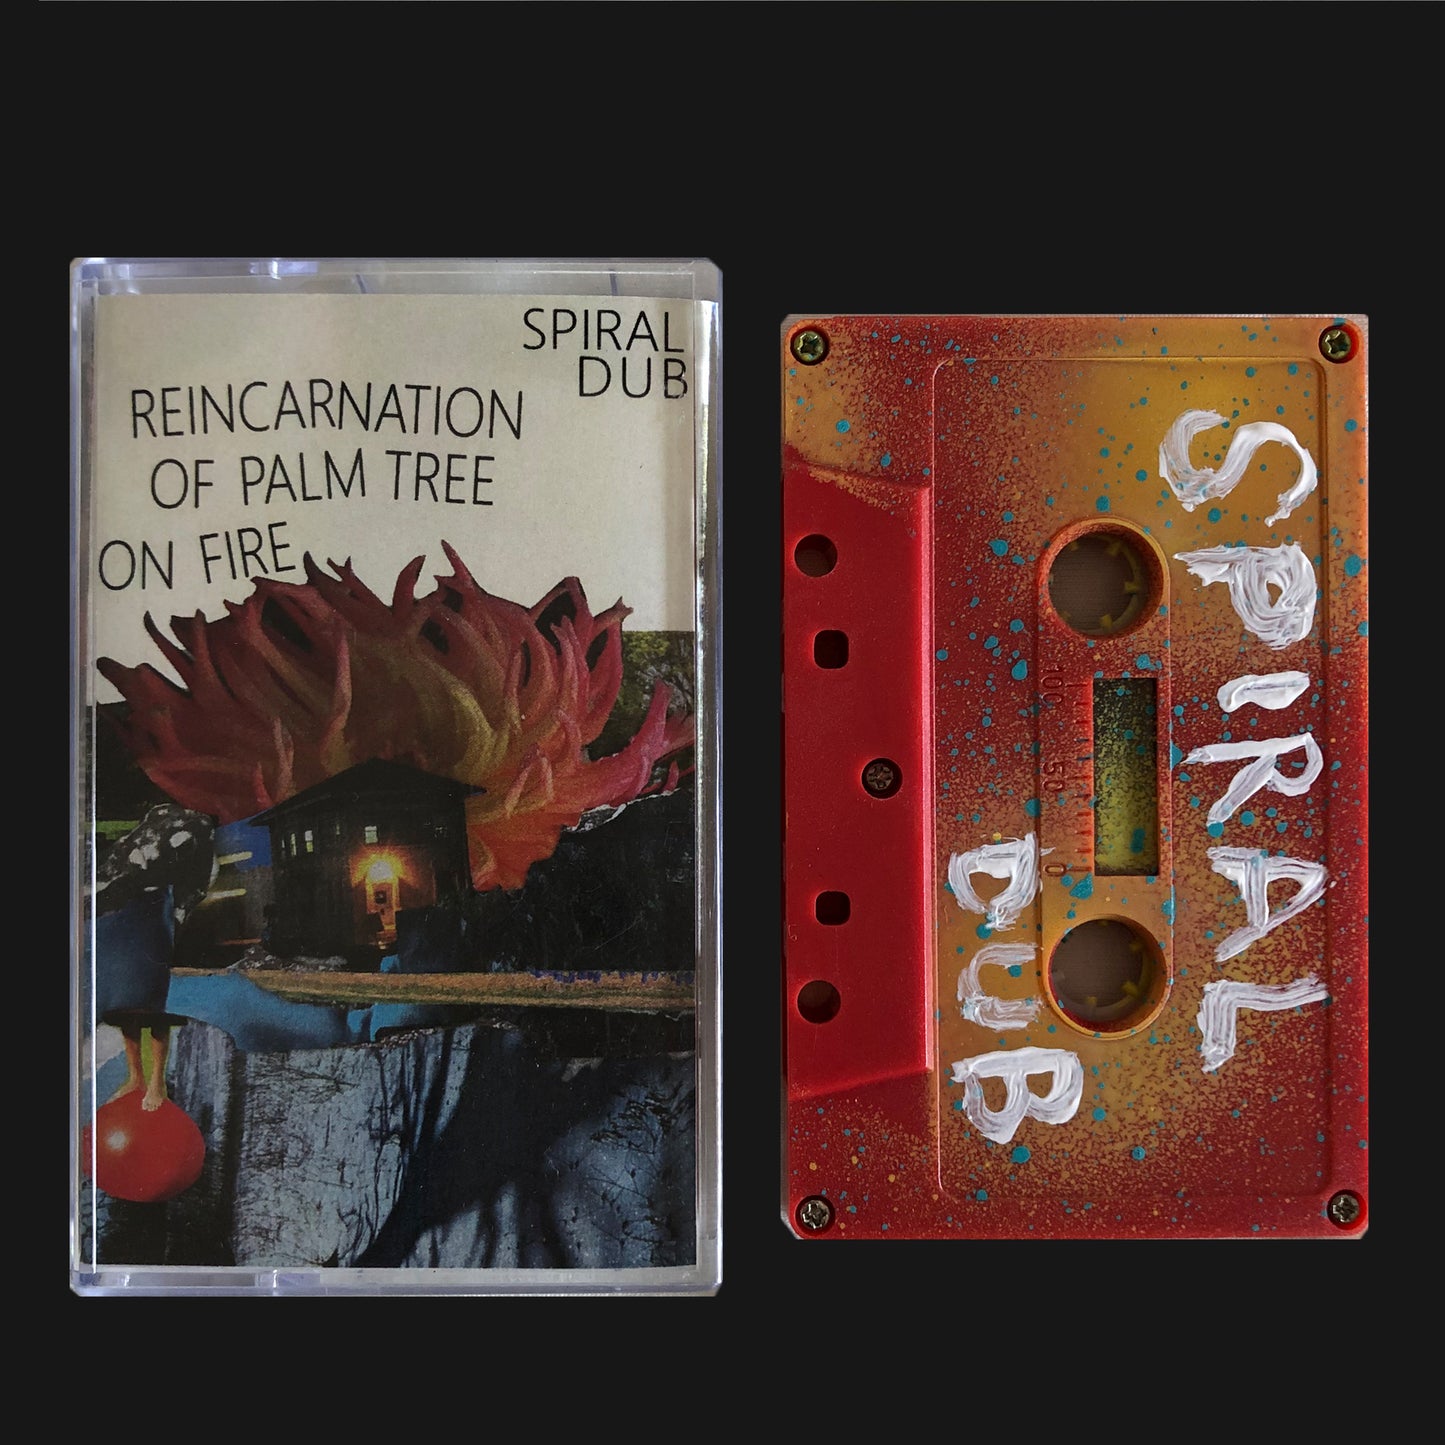 SPIRAL DUB - "REINCARNATION OF PALM TREE ON FIRE" CS